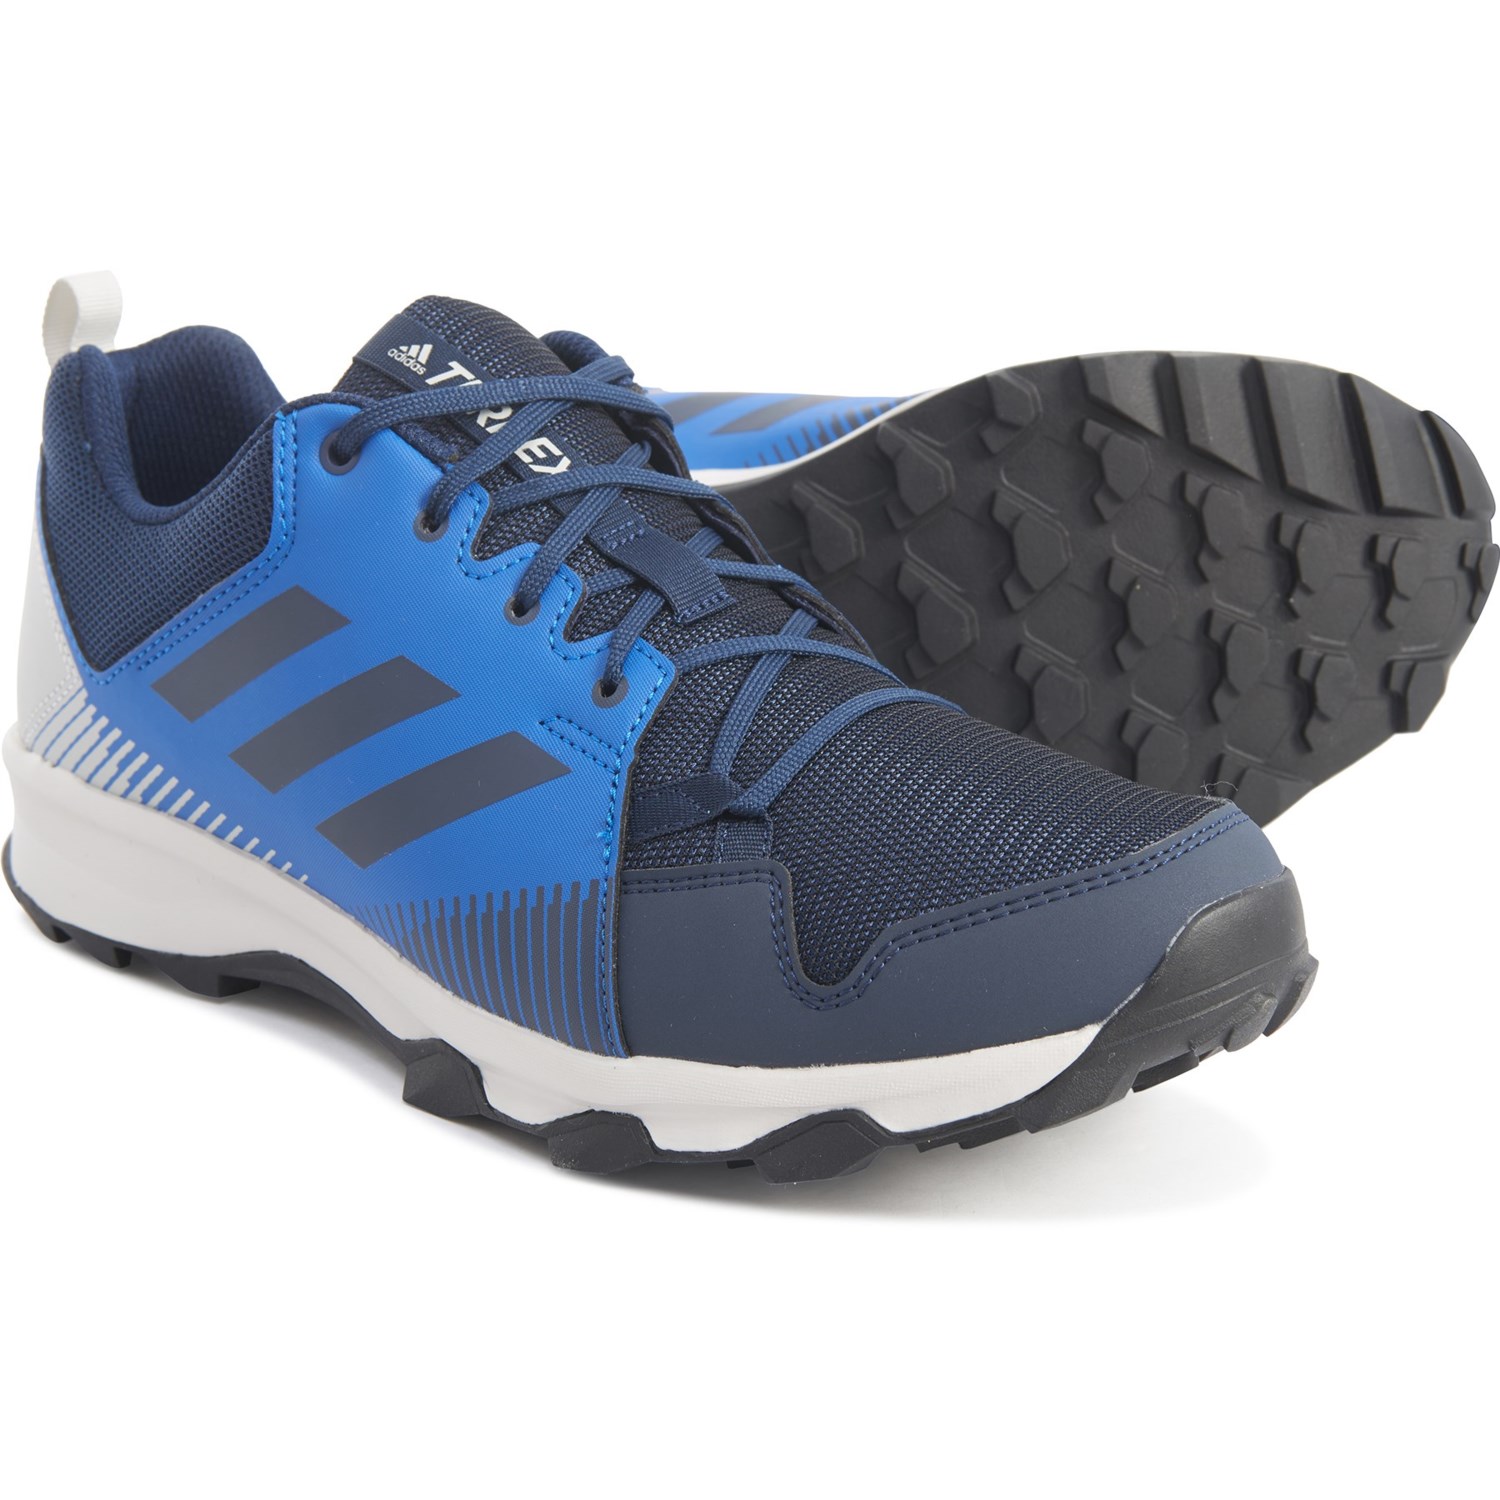 adidas terrex tracerocker trail running shoes